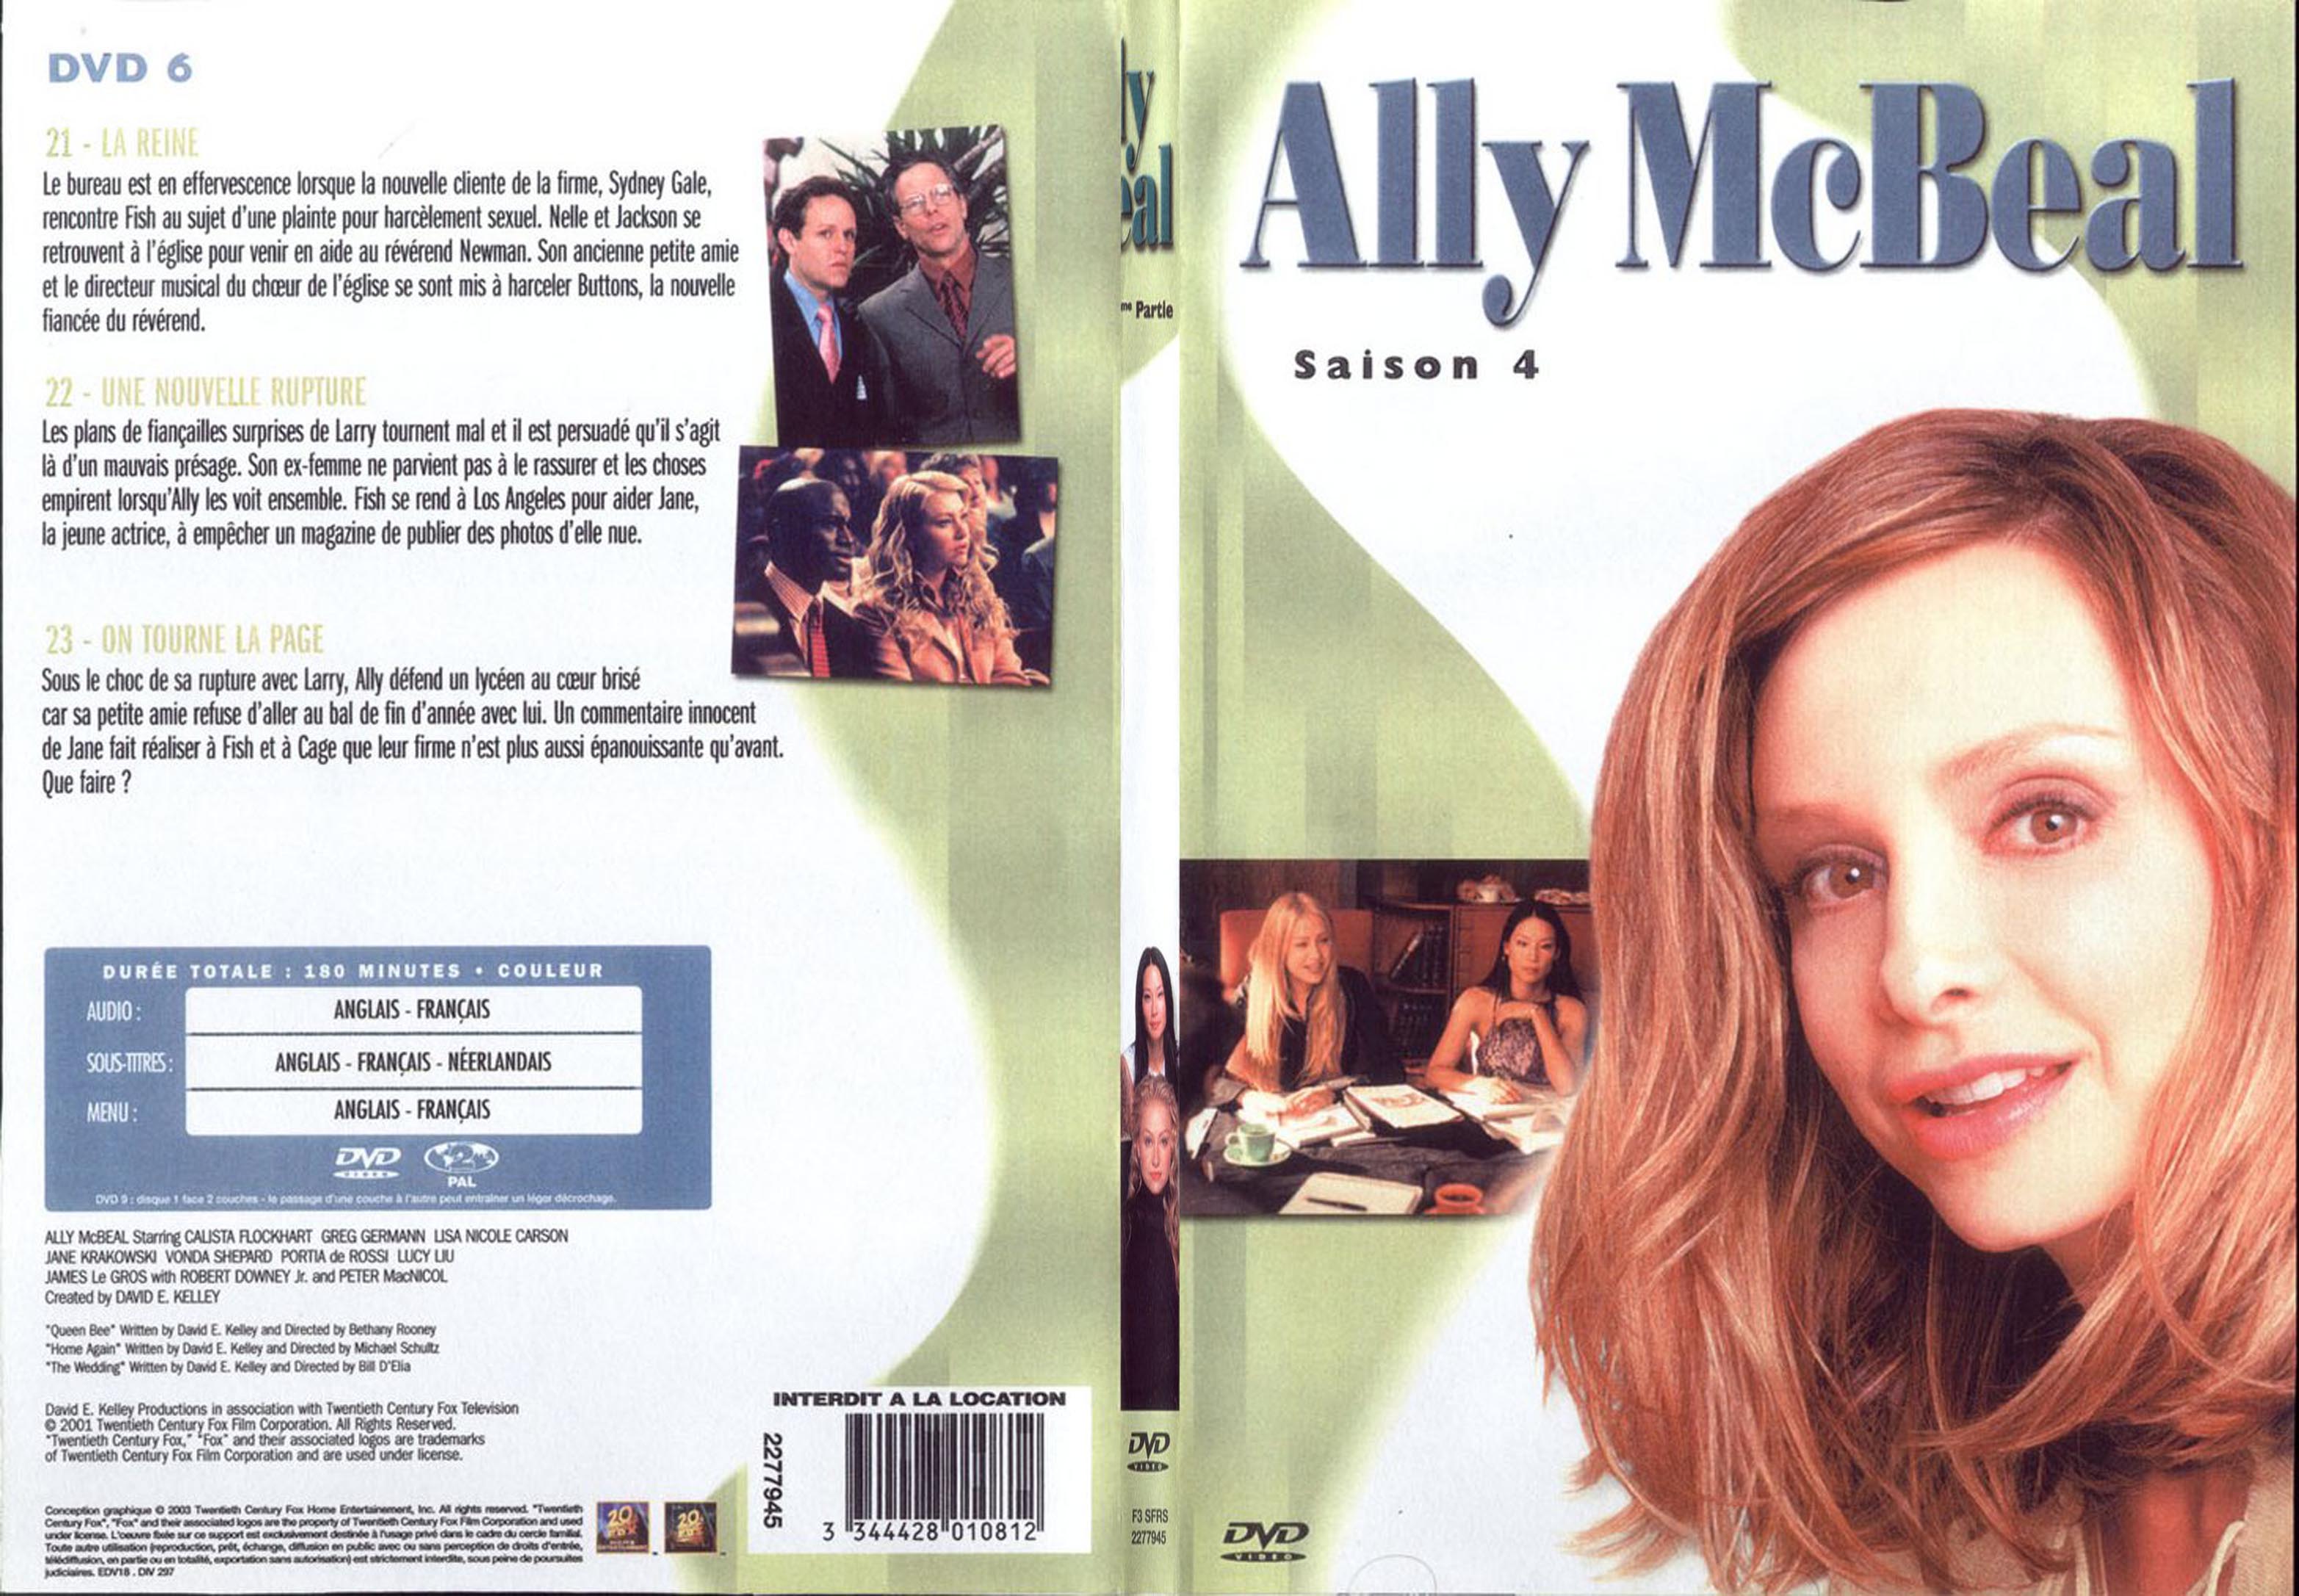 Jaquette DVD Ally McBeal saison 4 dvd 6 - SLIM